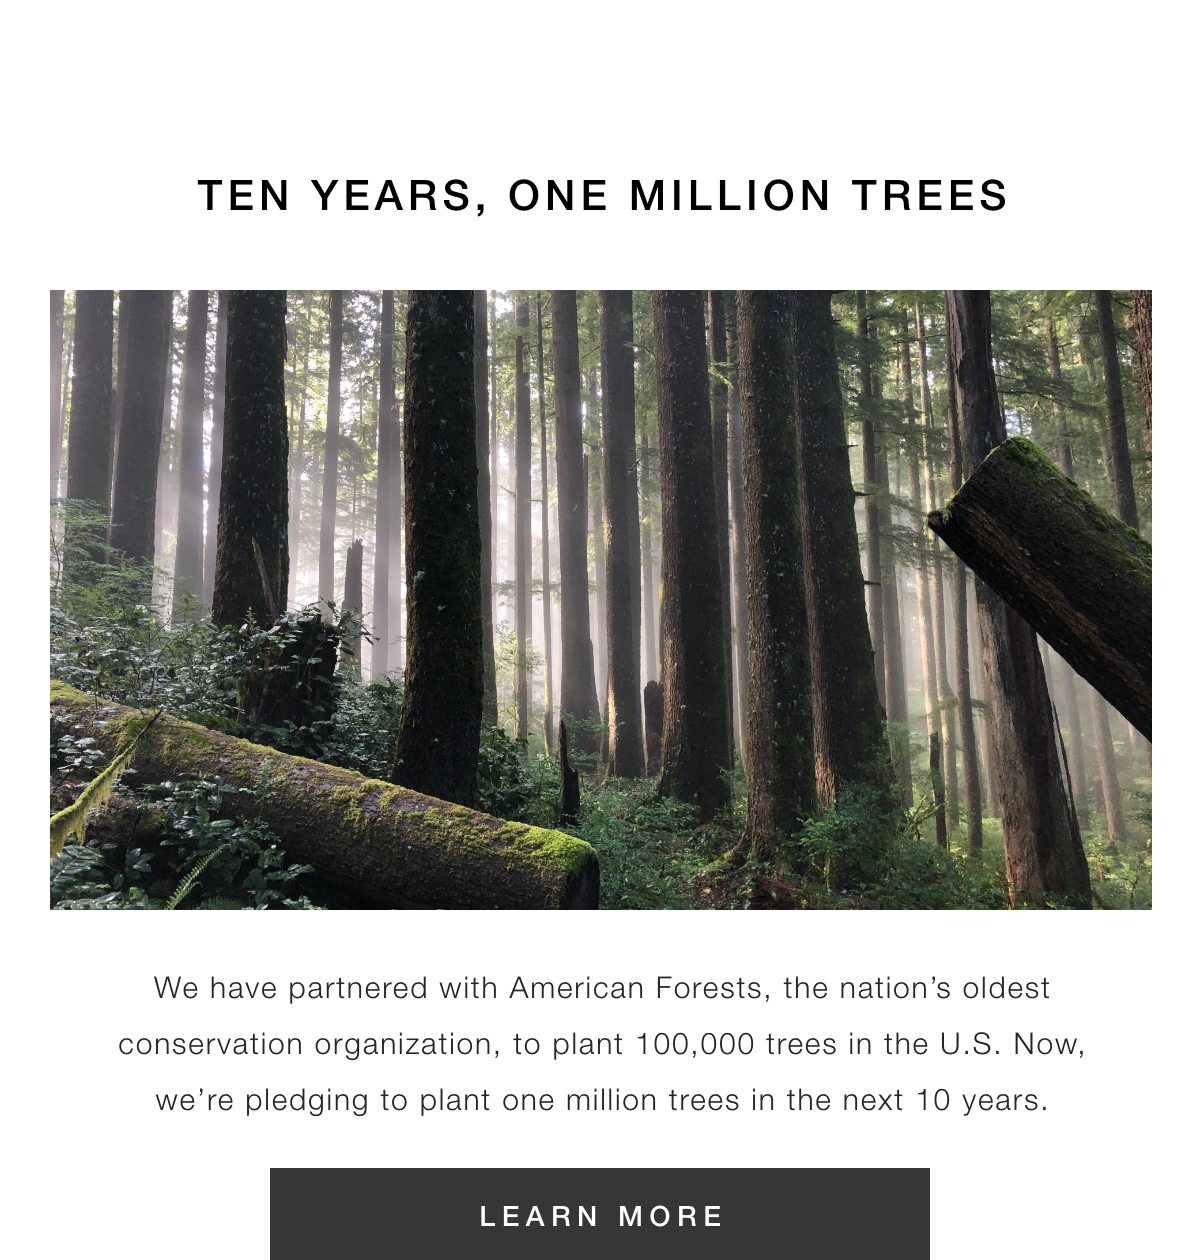 10 years, one million trees pledge. 